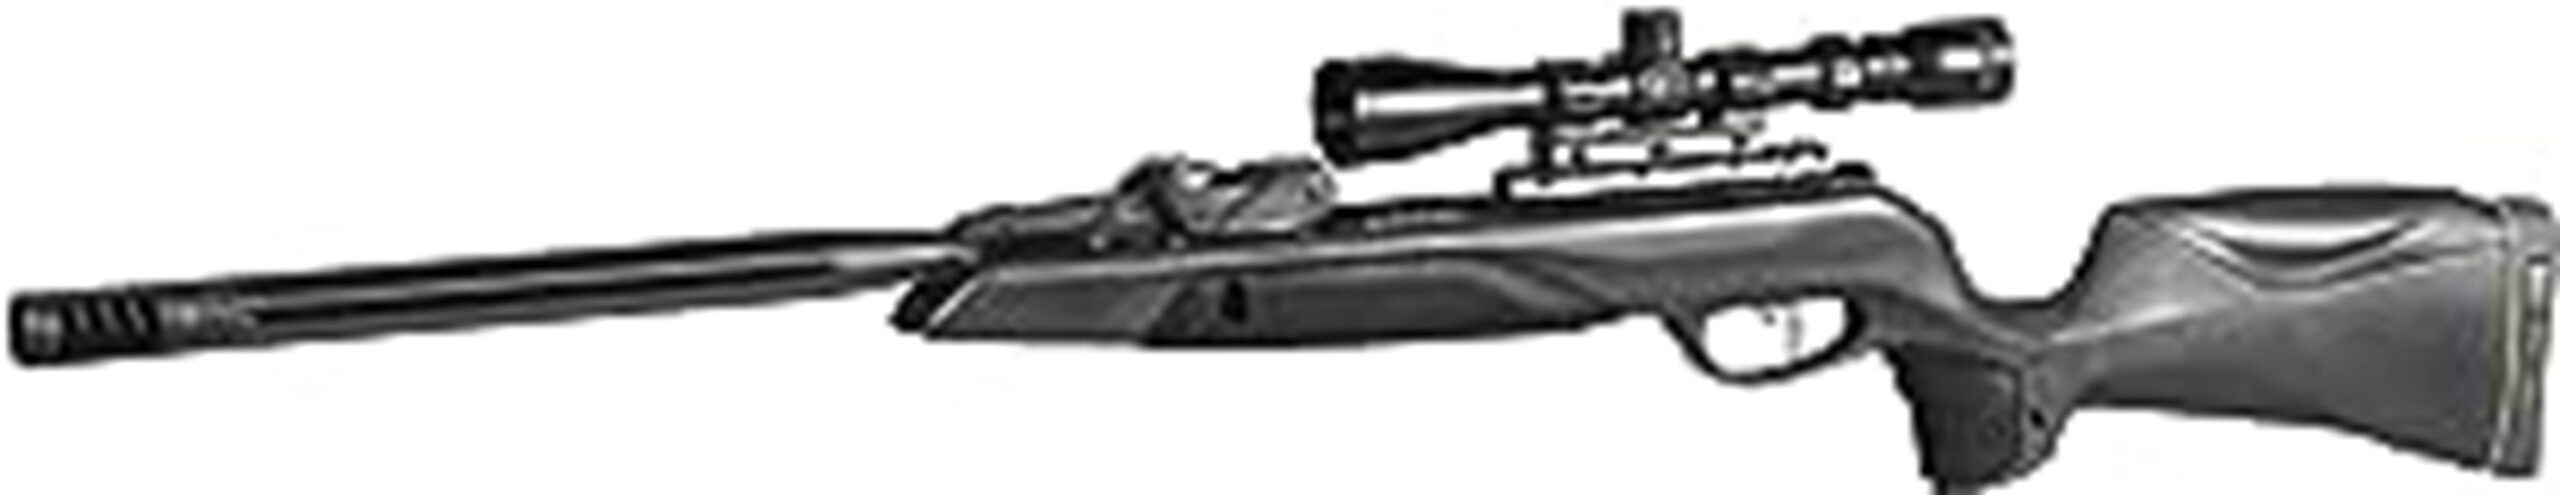 22 caliber multi shot rifle